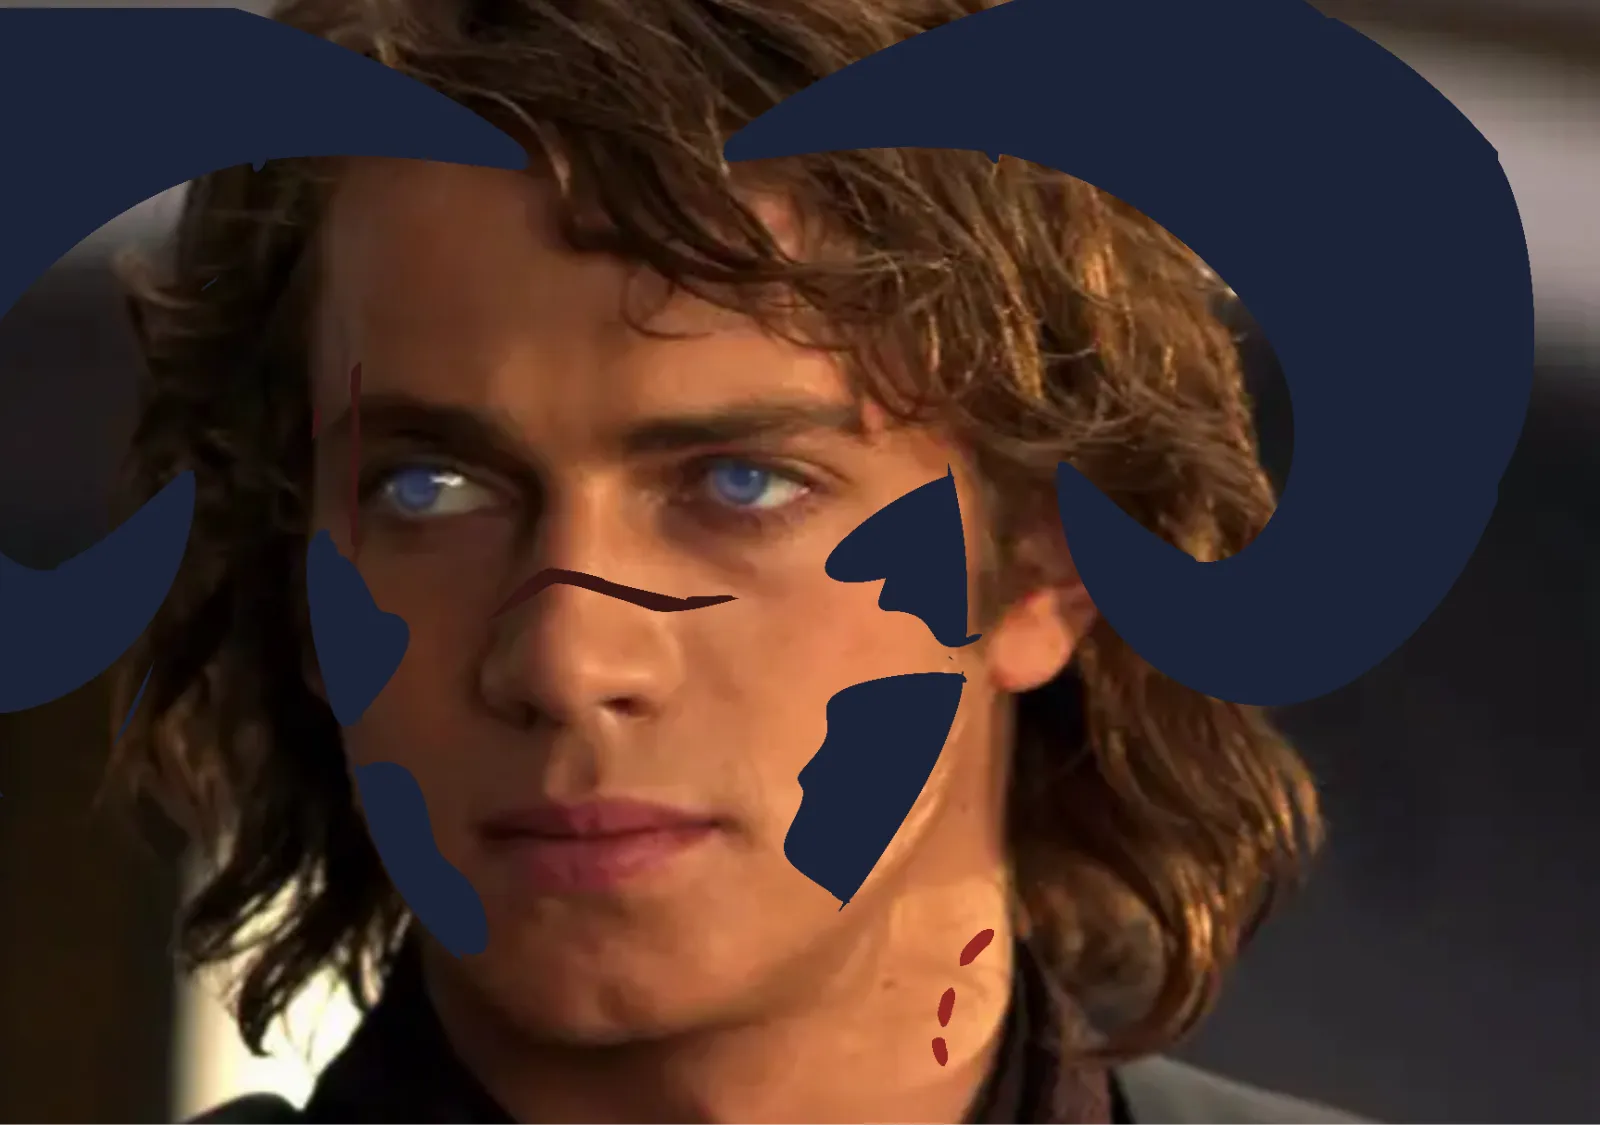 Avatar of Anakin Skywalker